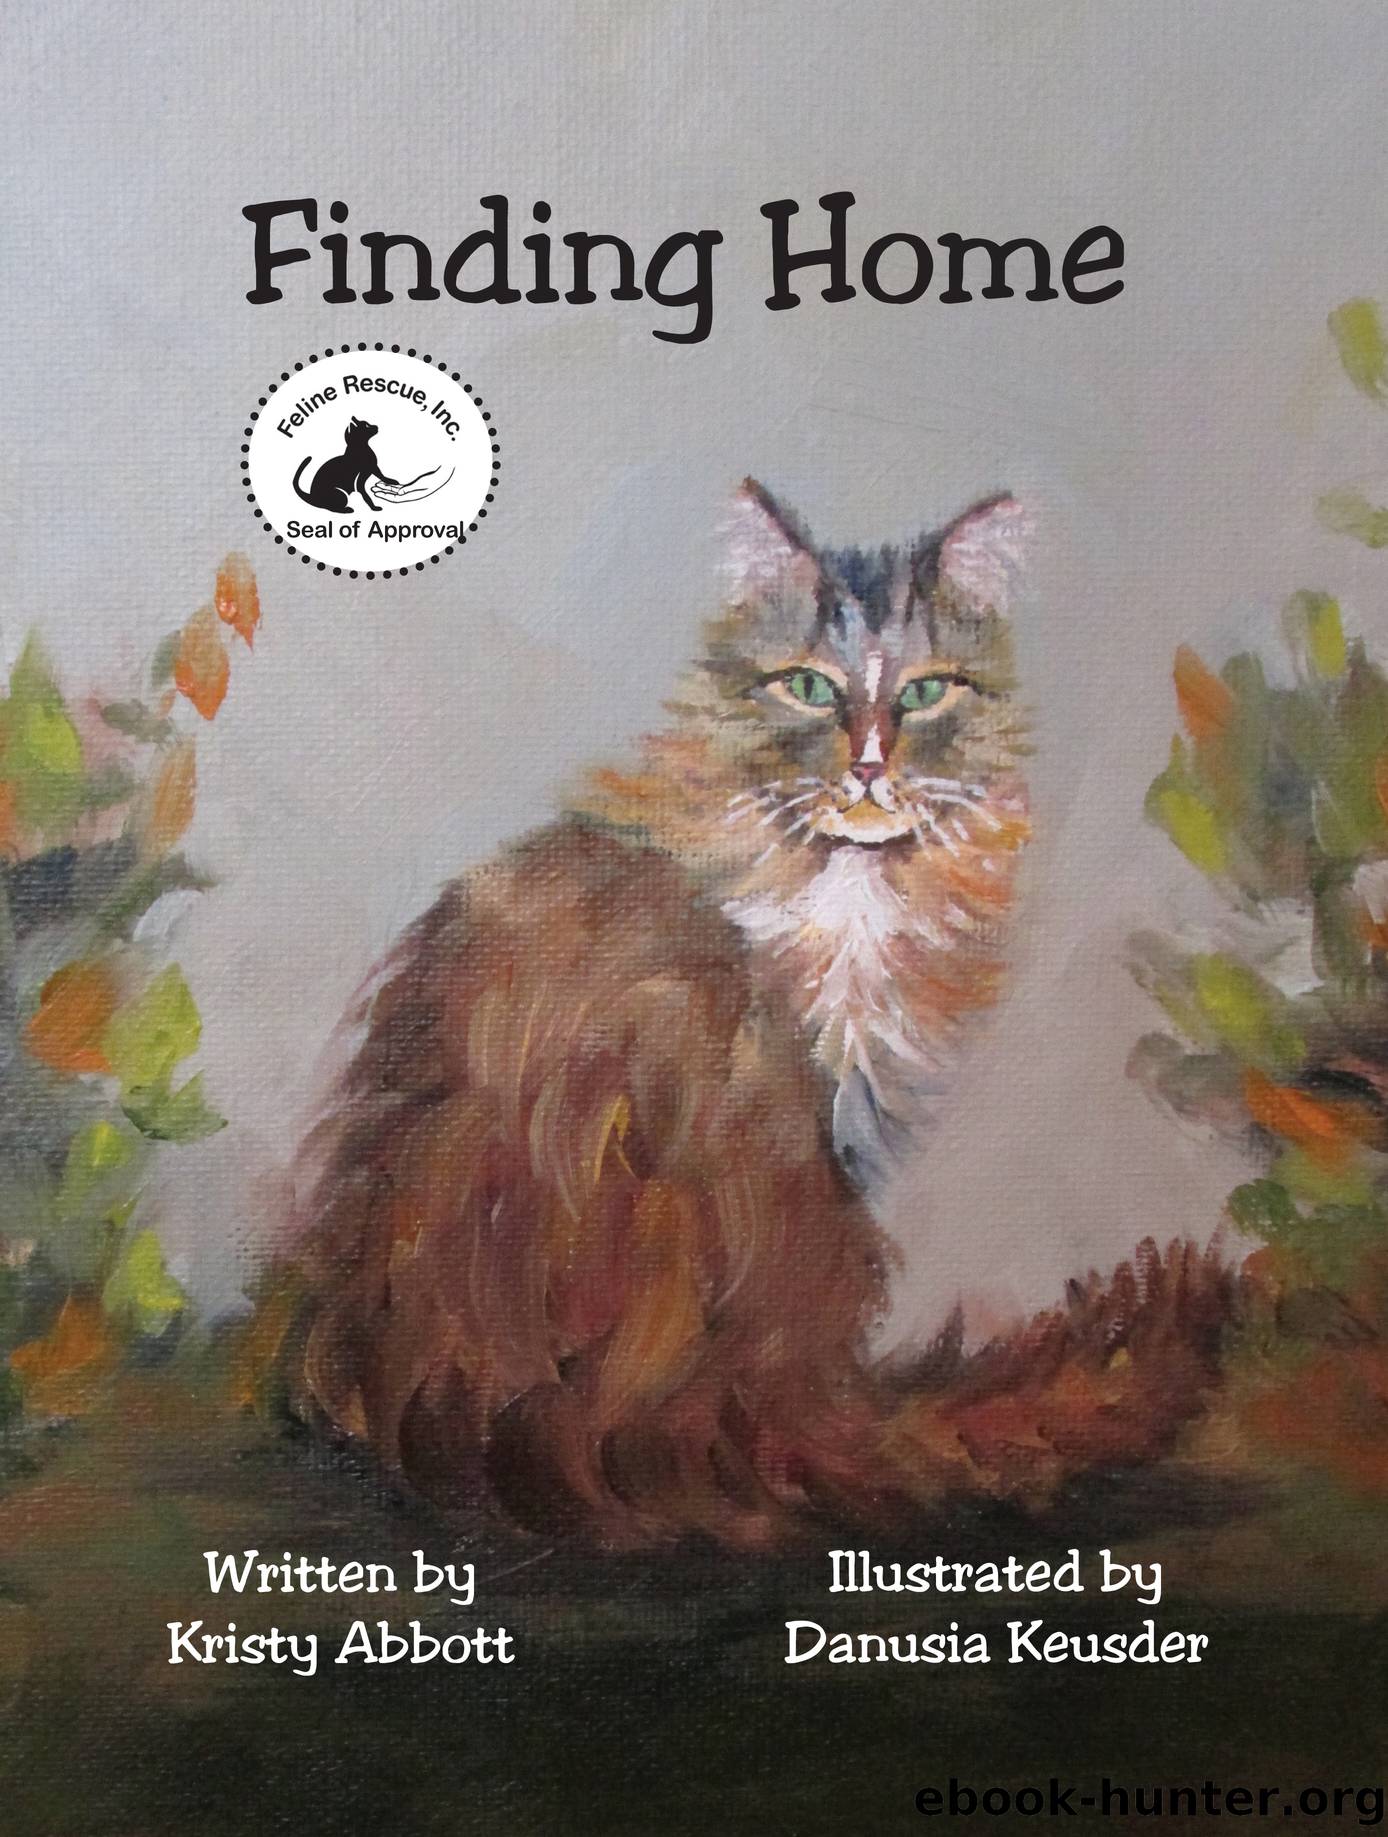 Finding Home by Kristy Abbott